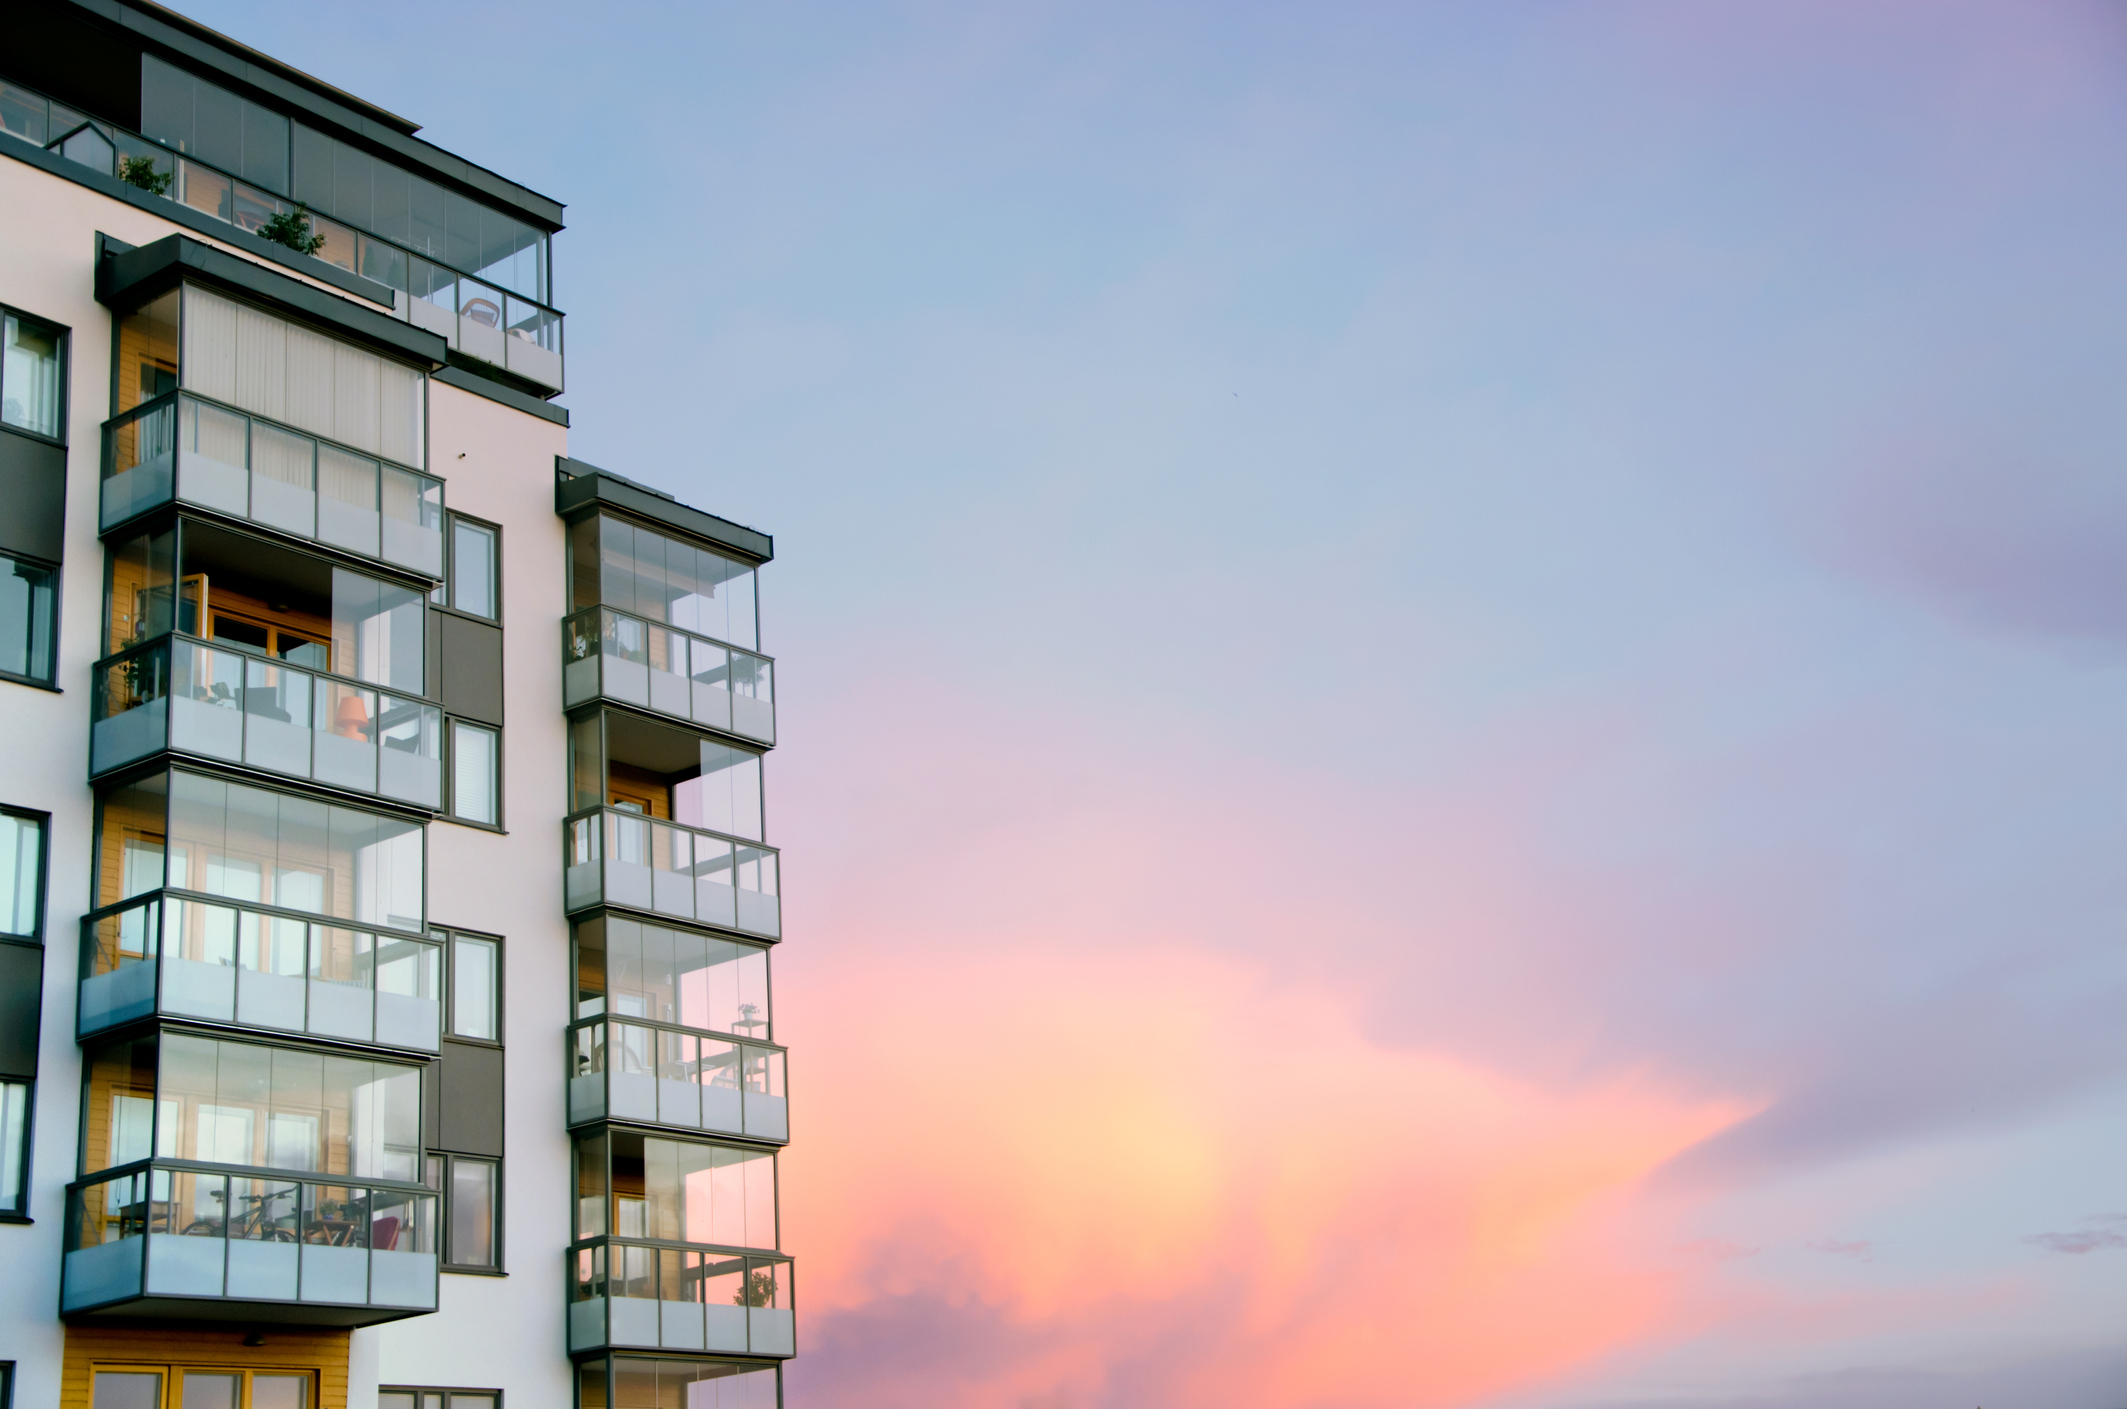 Condo building highlighting condominium audit deficiencies